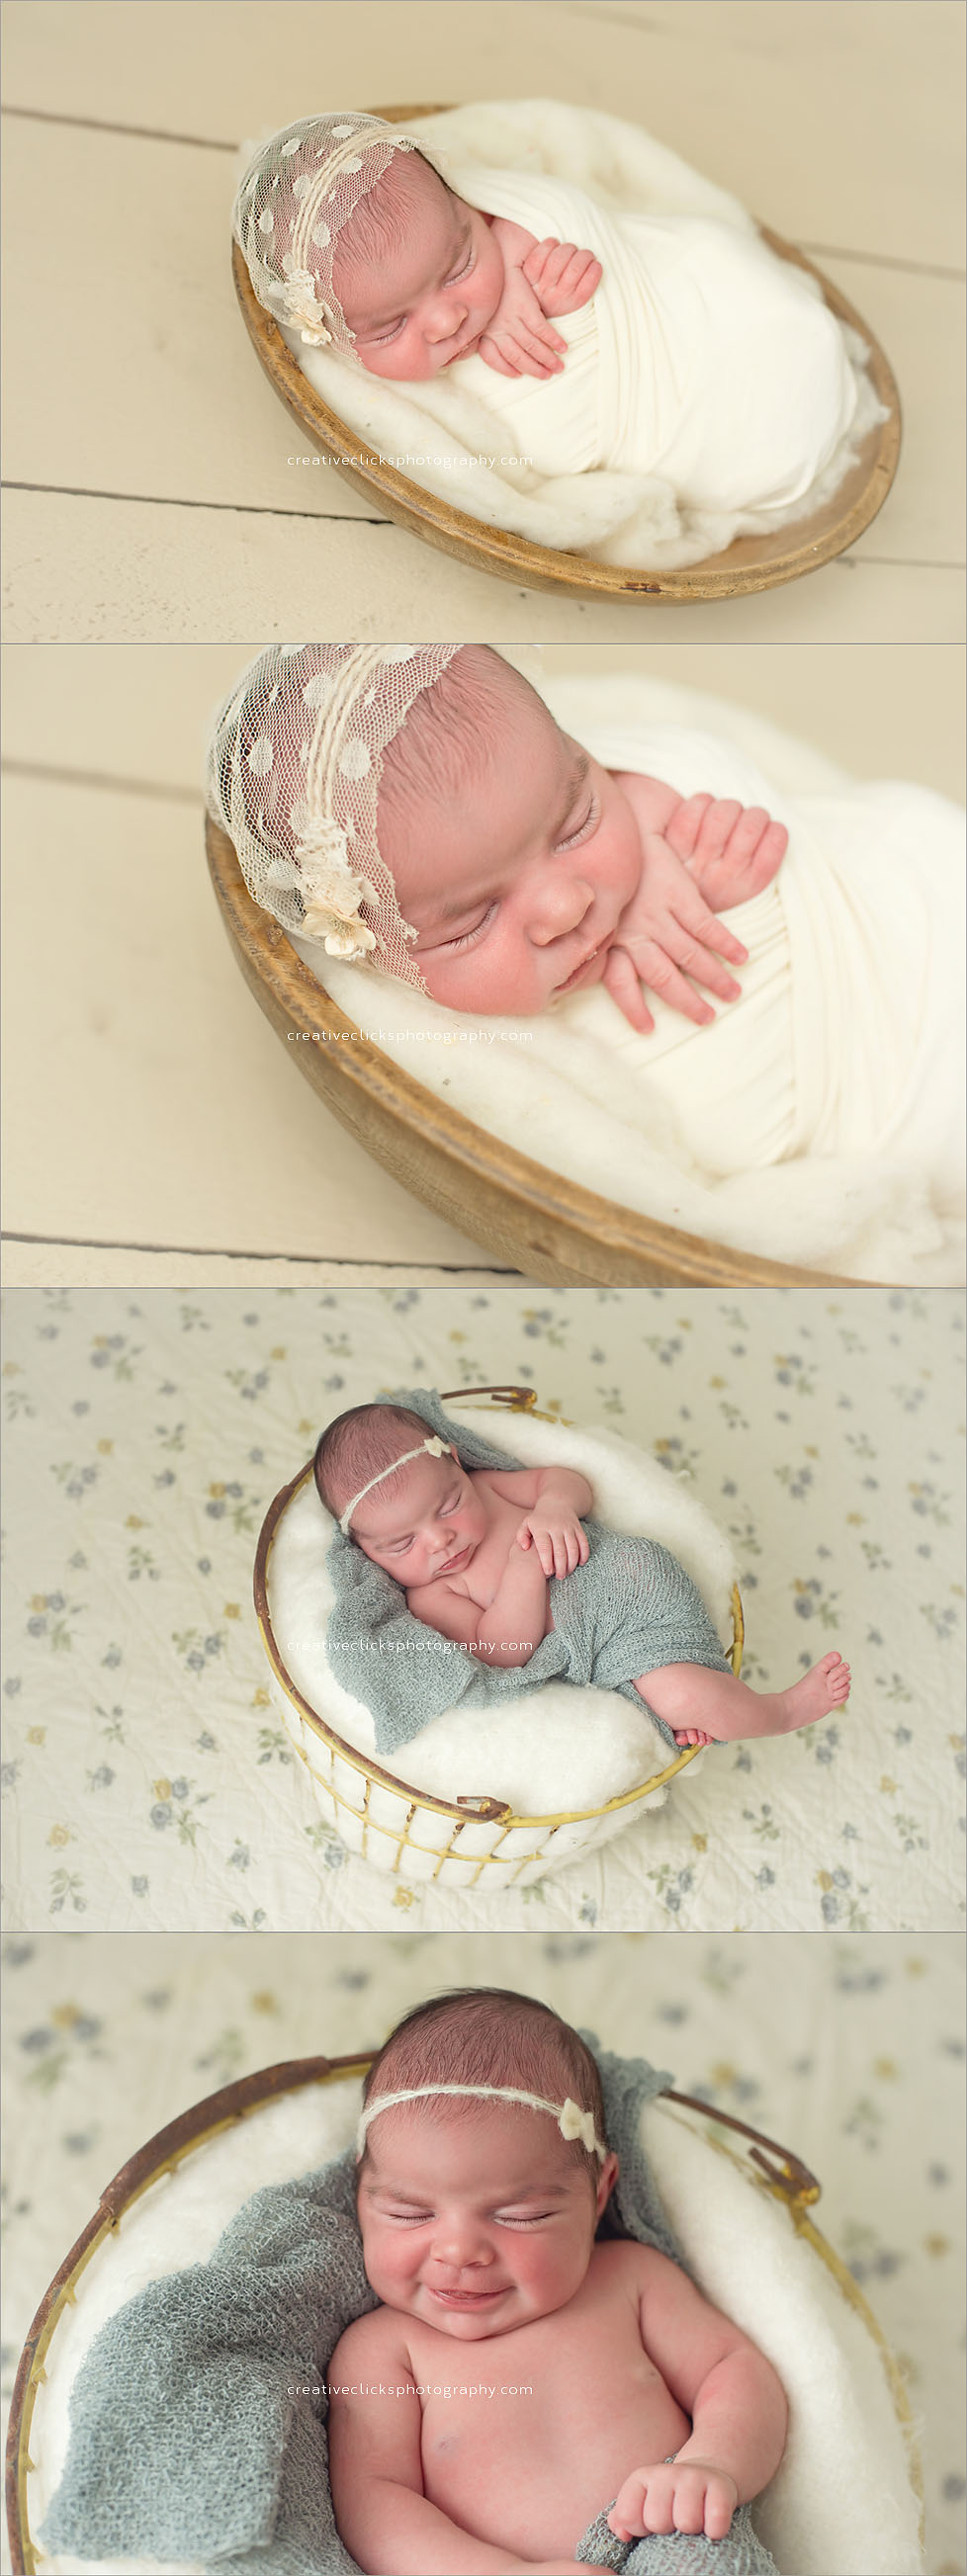 maelle-newborn-baby-photography